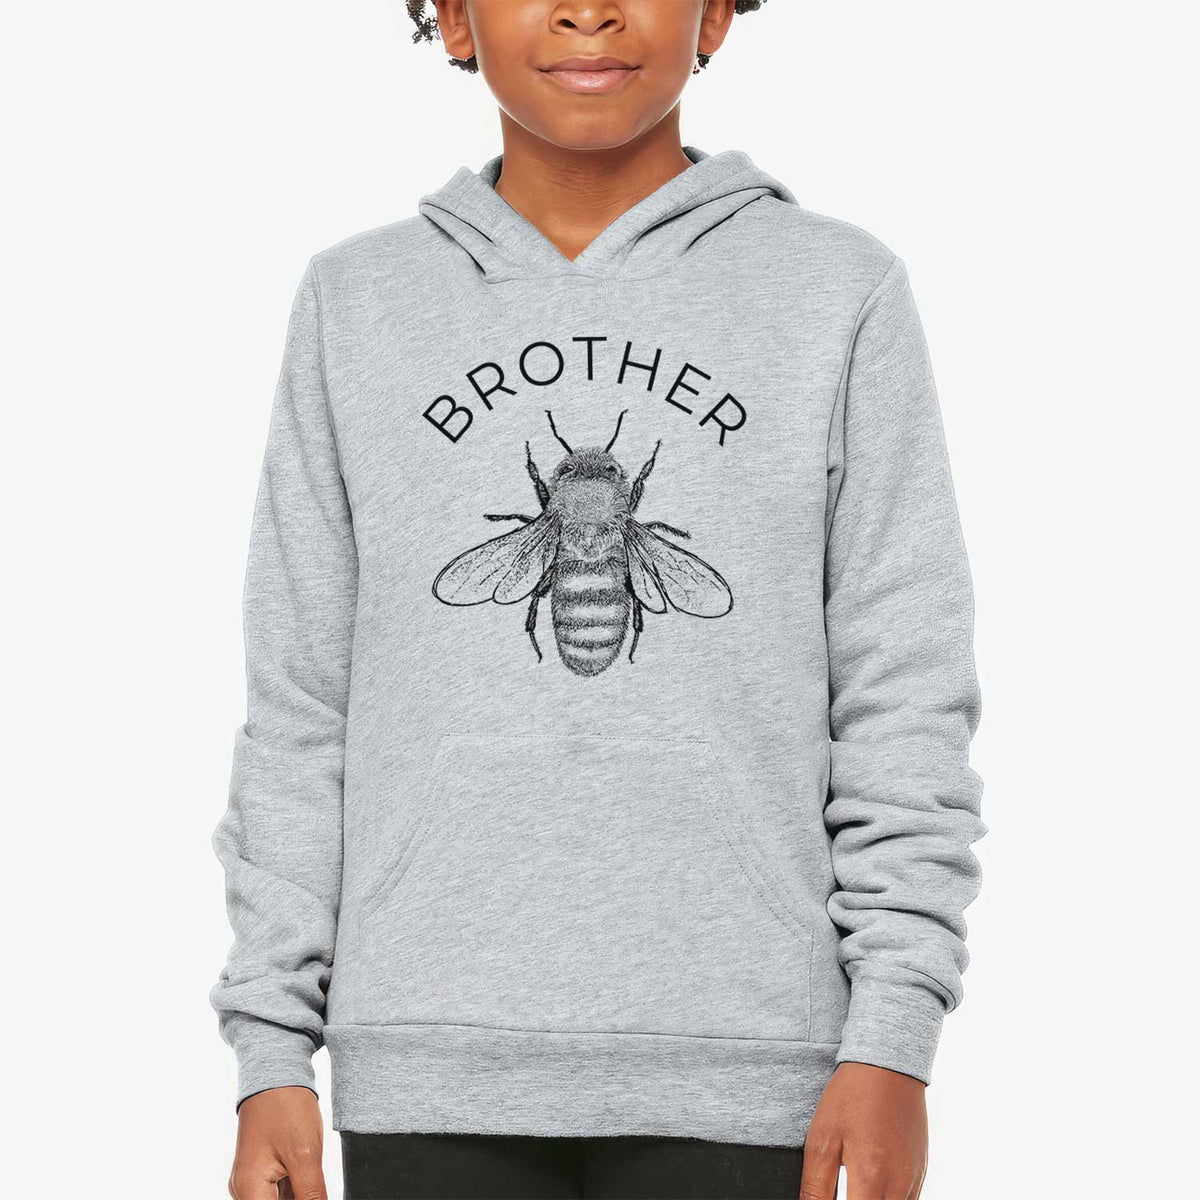 Brother Bee - Youth Hoodie Sweatshirt